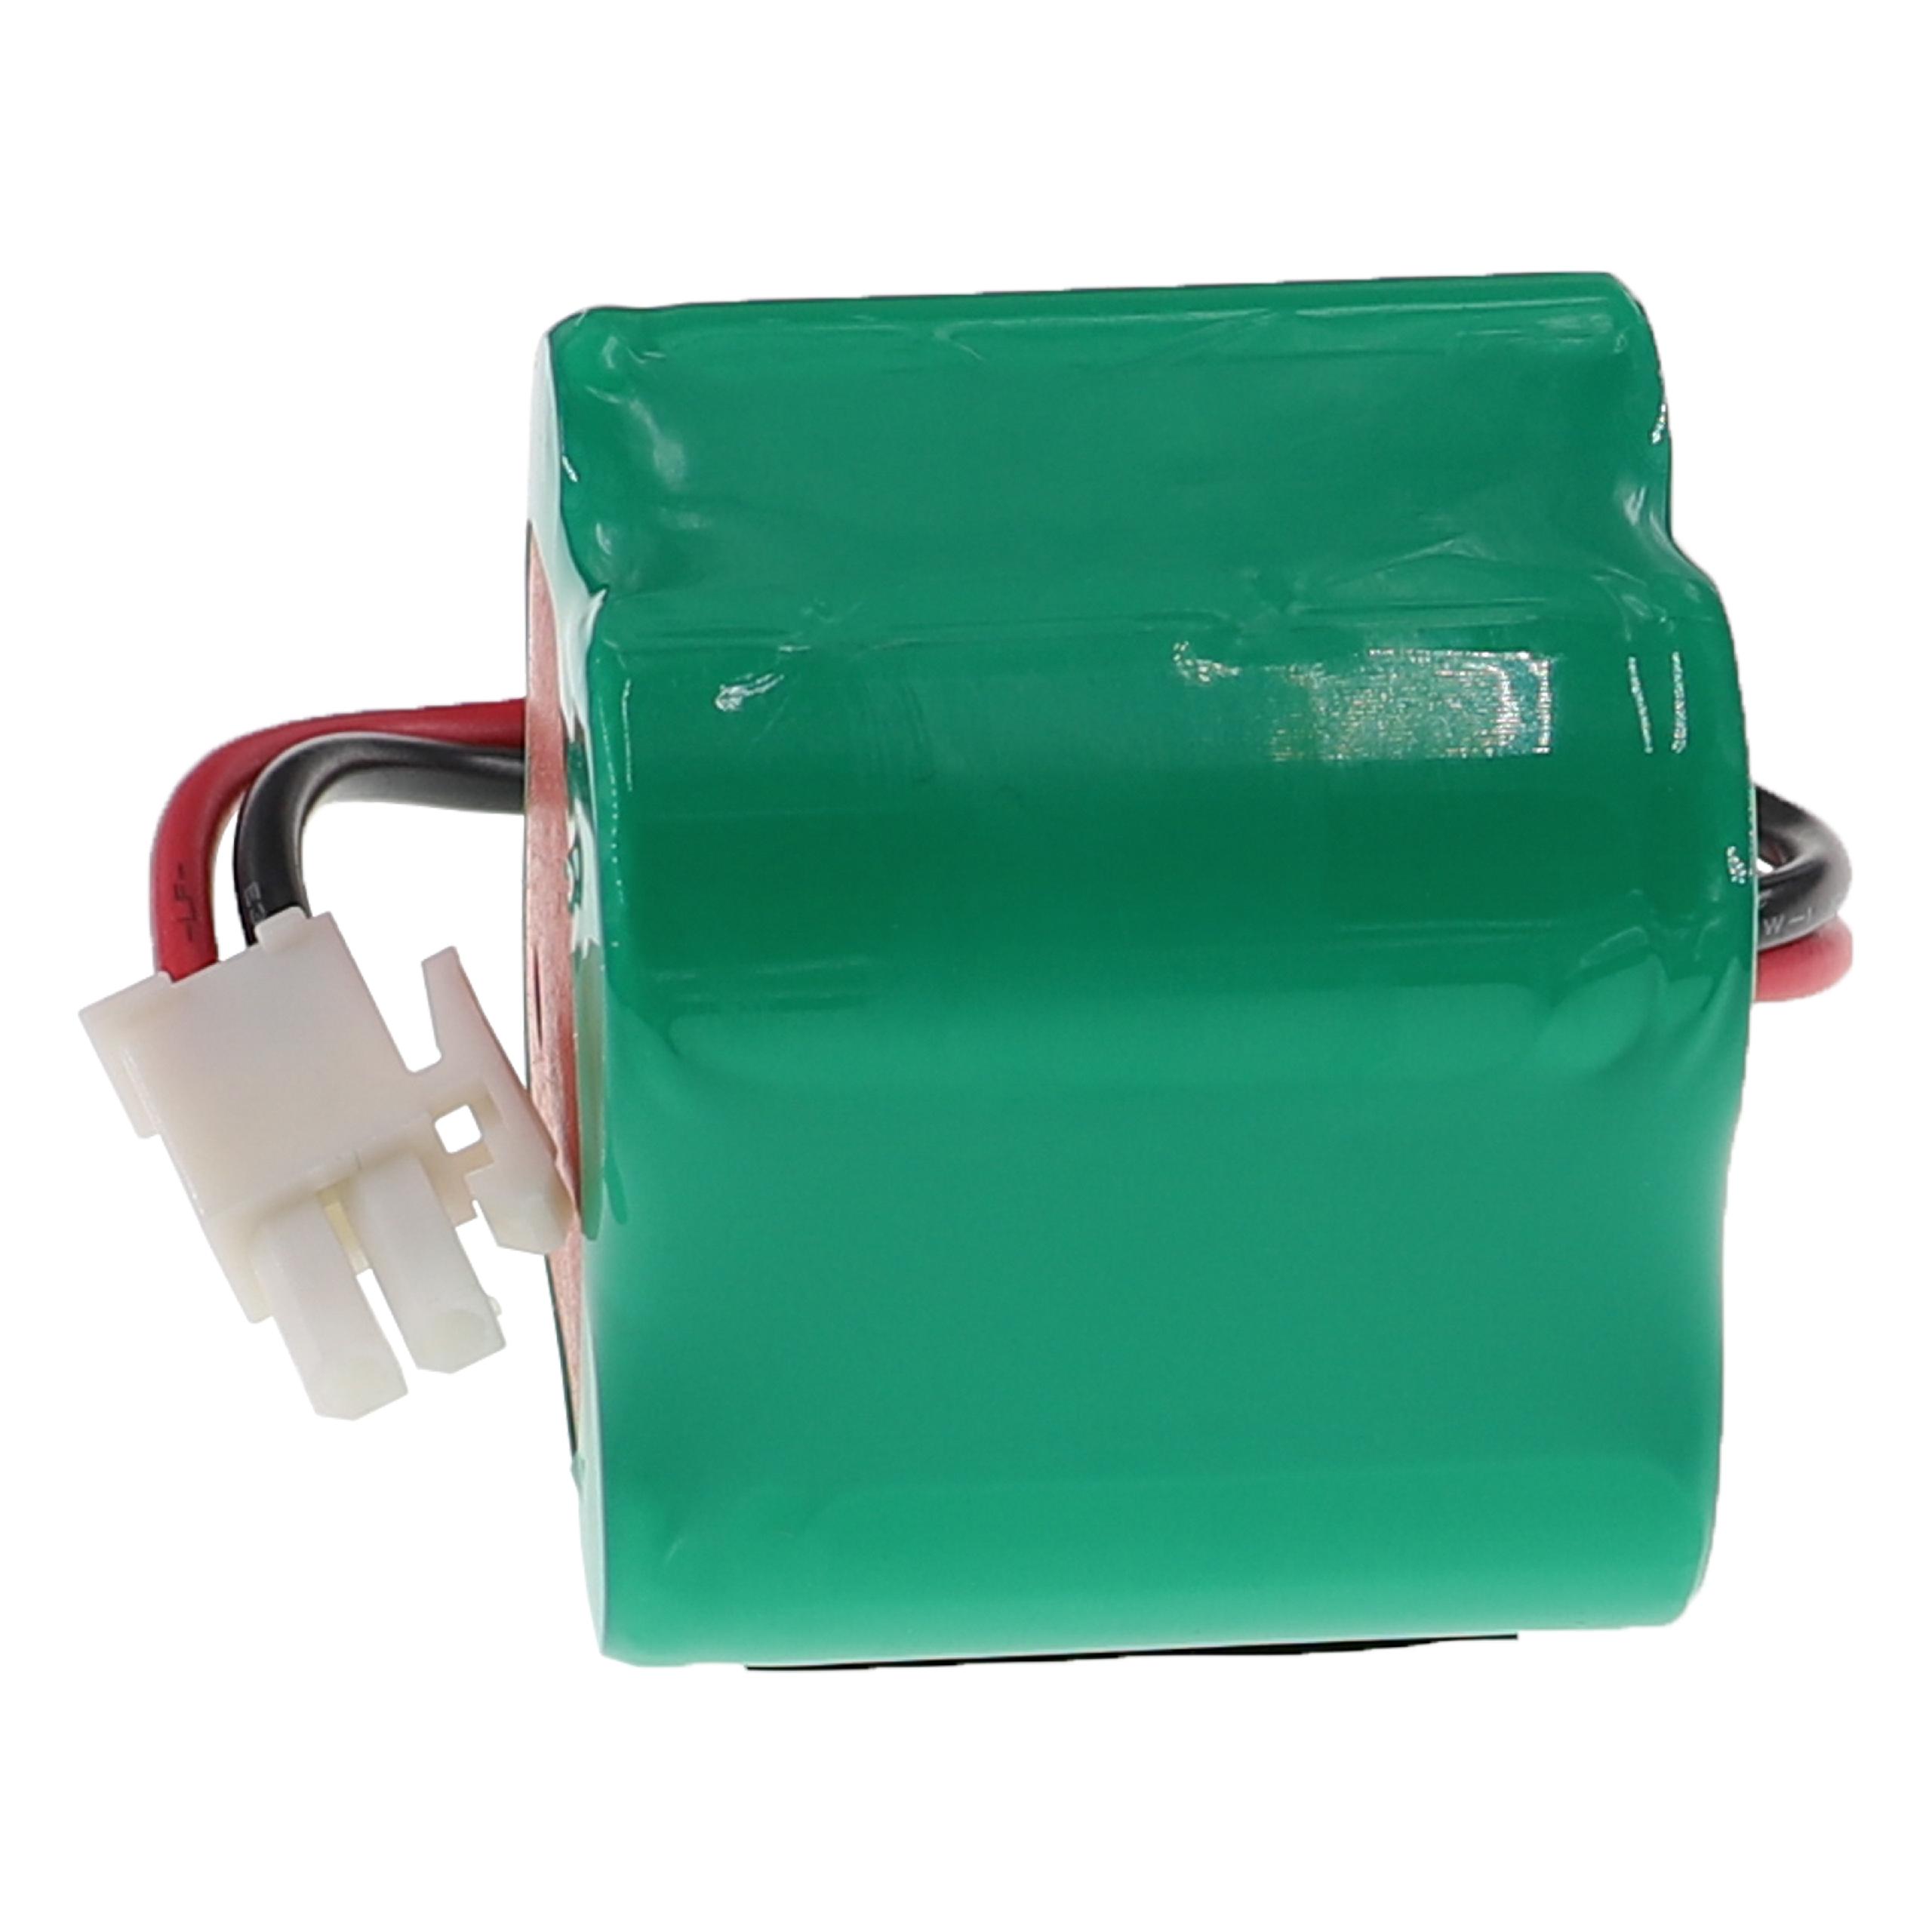 Batterie remplace Mosquito Magnet 565-035, MM565035, 9994141 pour lampe anti-insectes - 3000mAh 4,8V NiMH